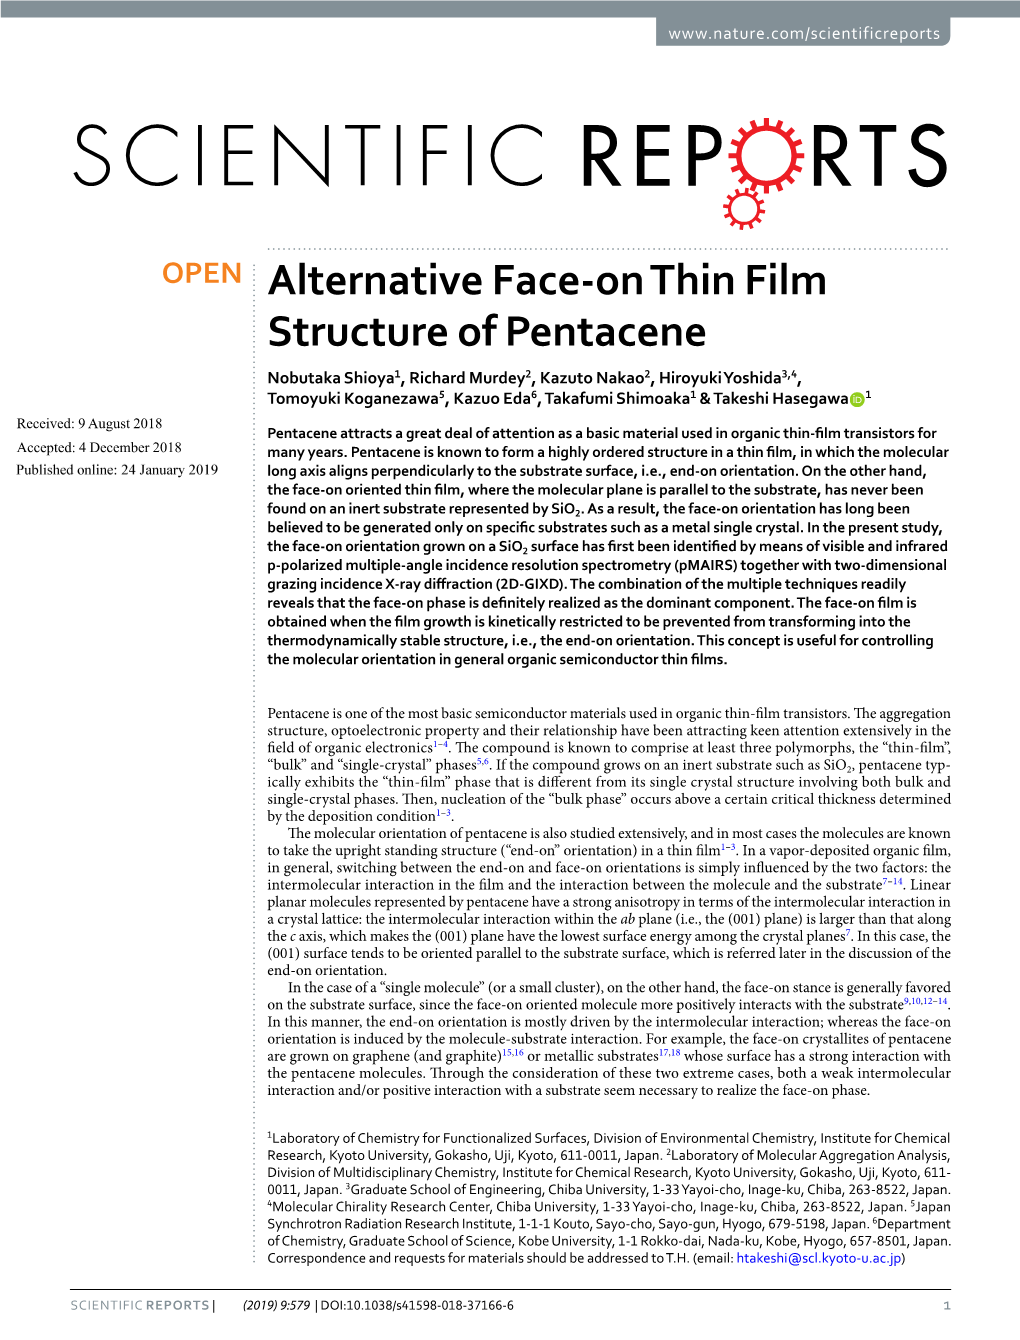 Alternative Face-On Thin Film Structure of Pentacene